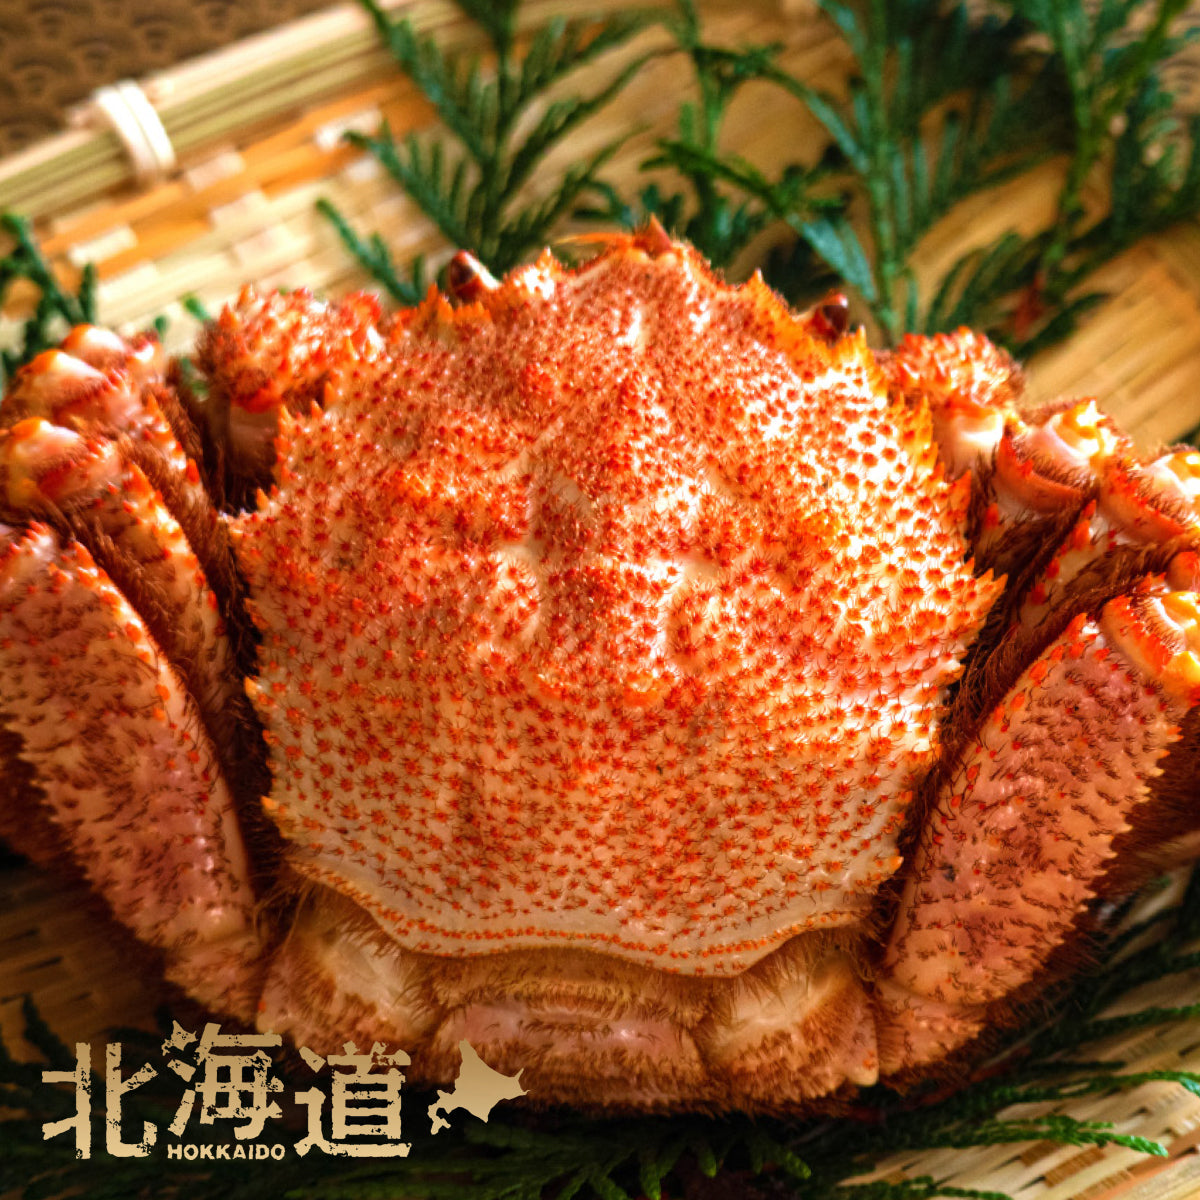 Hokkaido Boiled Horsehair Crab